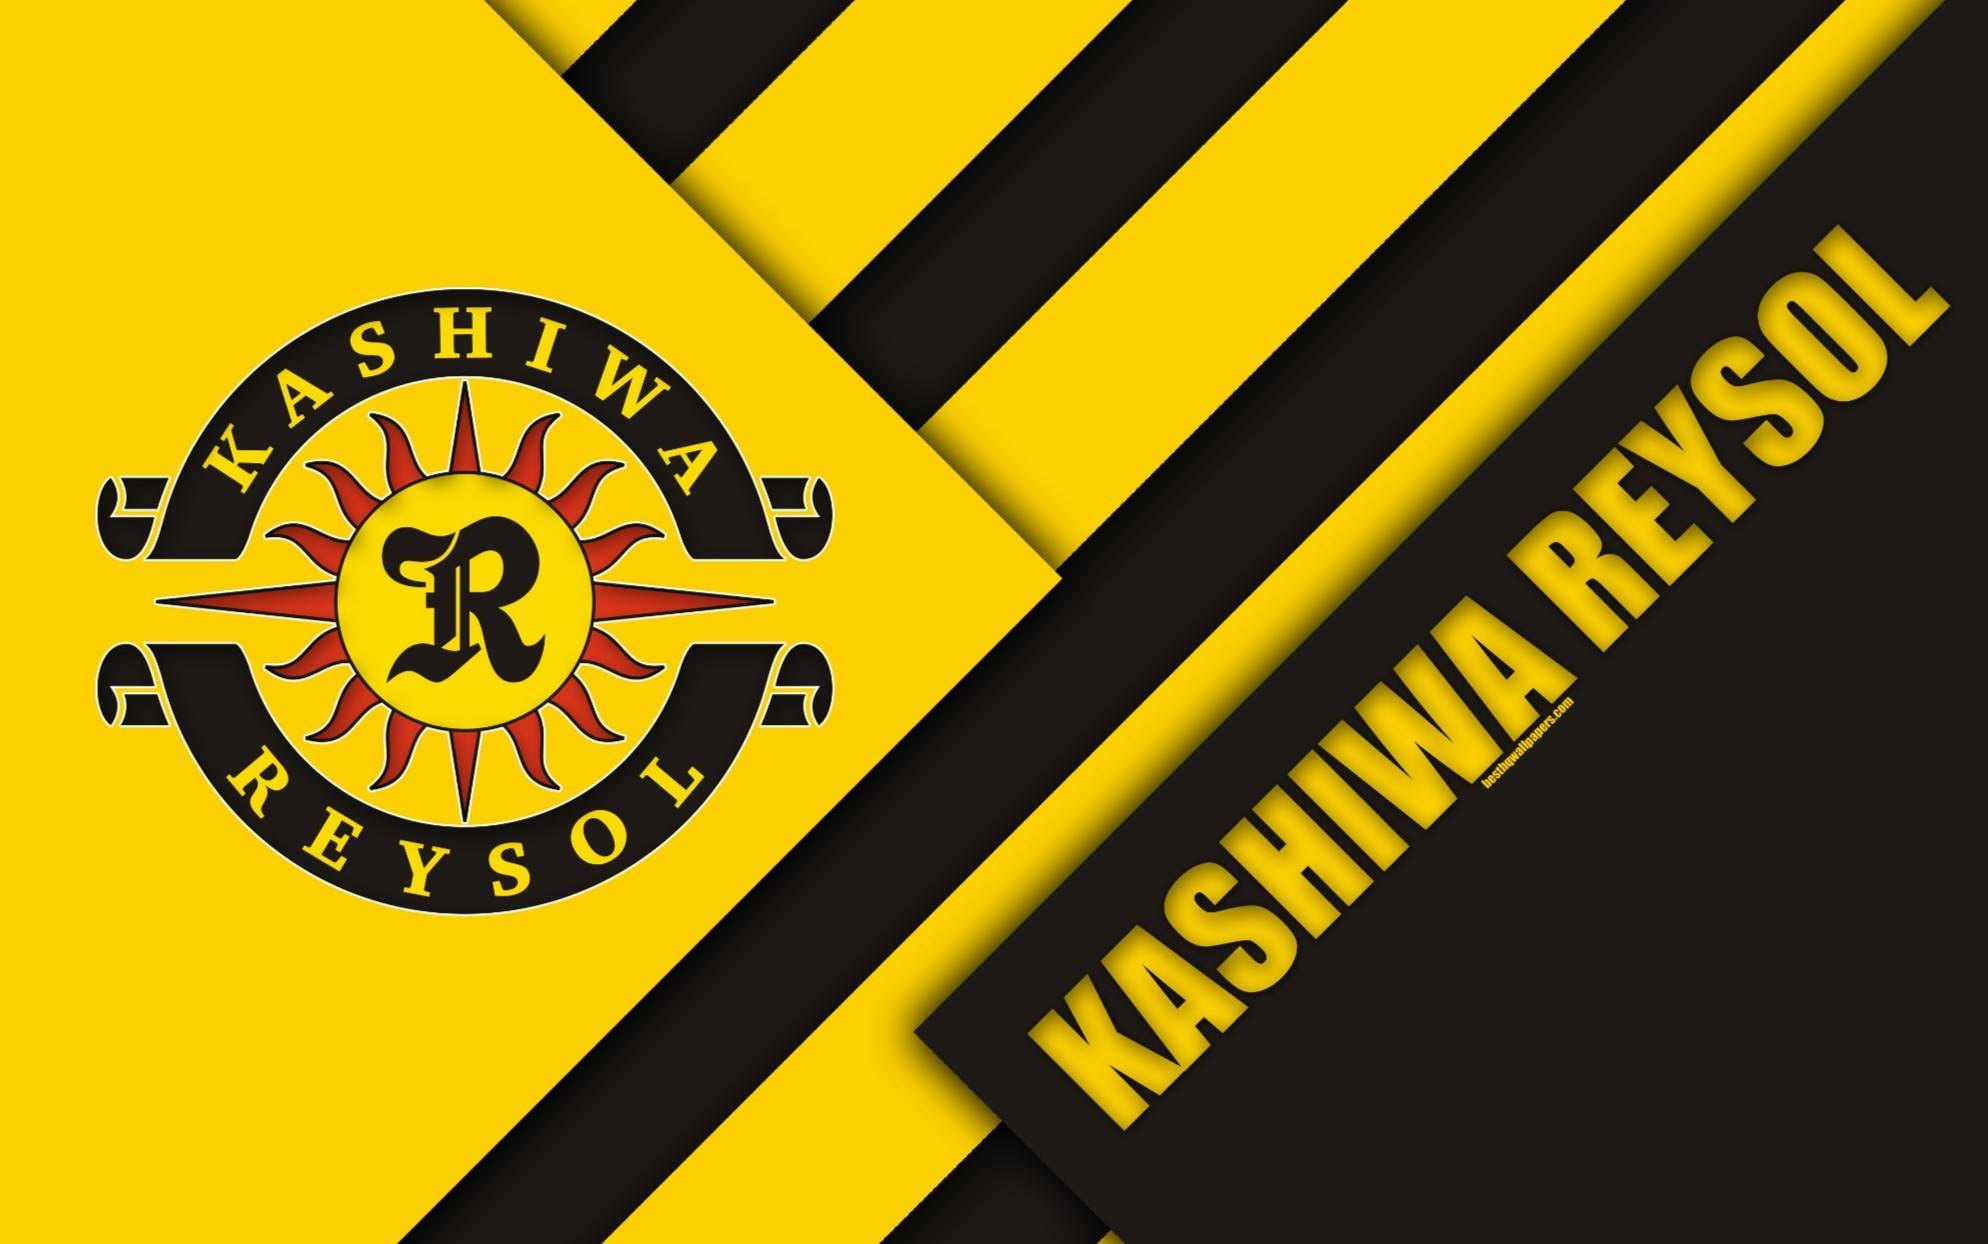 kashiwa-reysol-fc-4k-material-design-japanese-football-club-black-yellow-abstraction